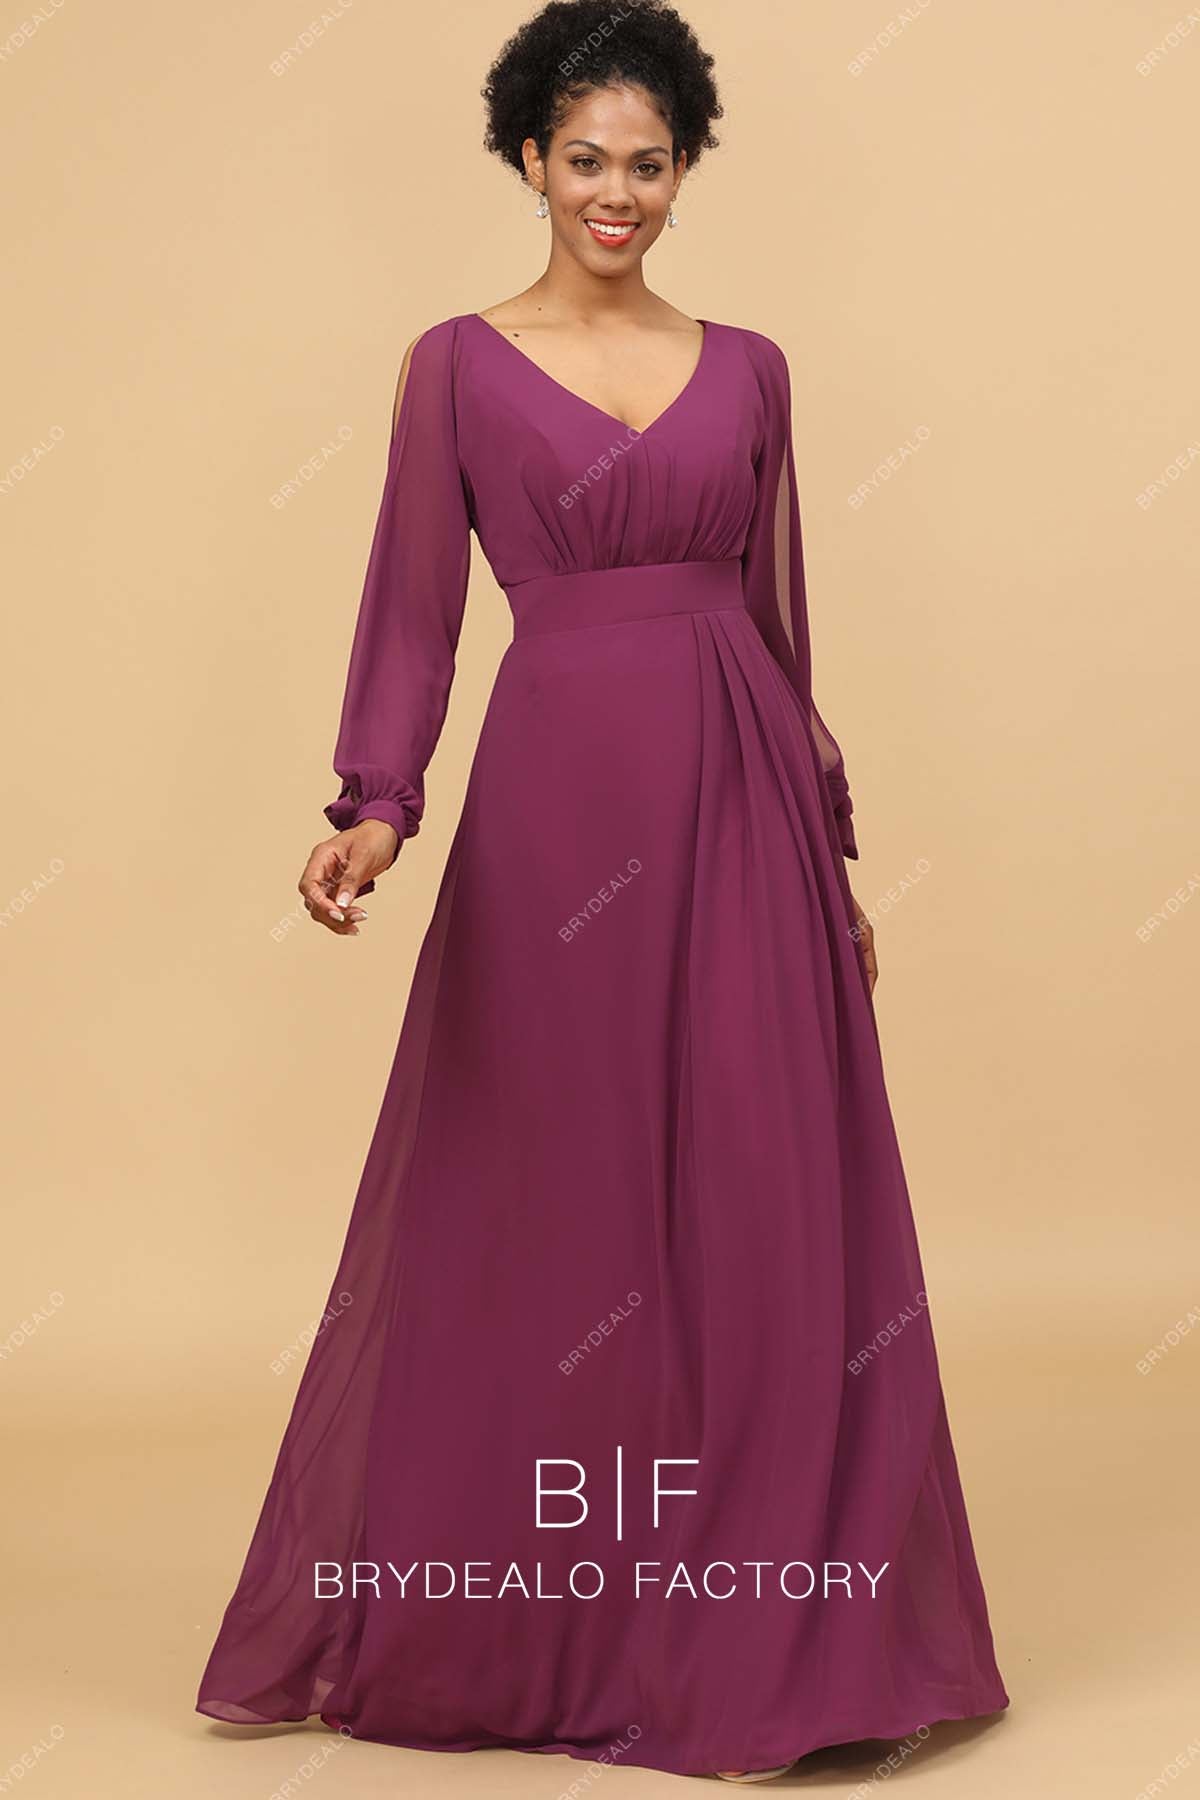 V-neck long sleeves purple bridesmaid dress